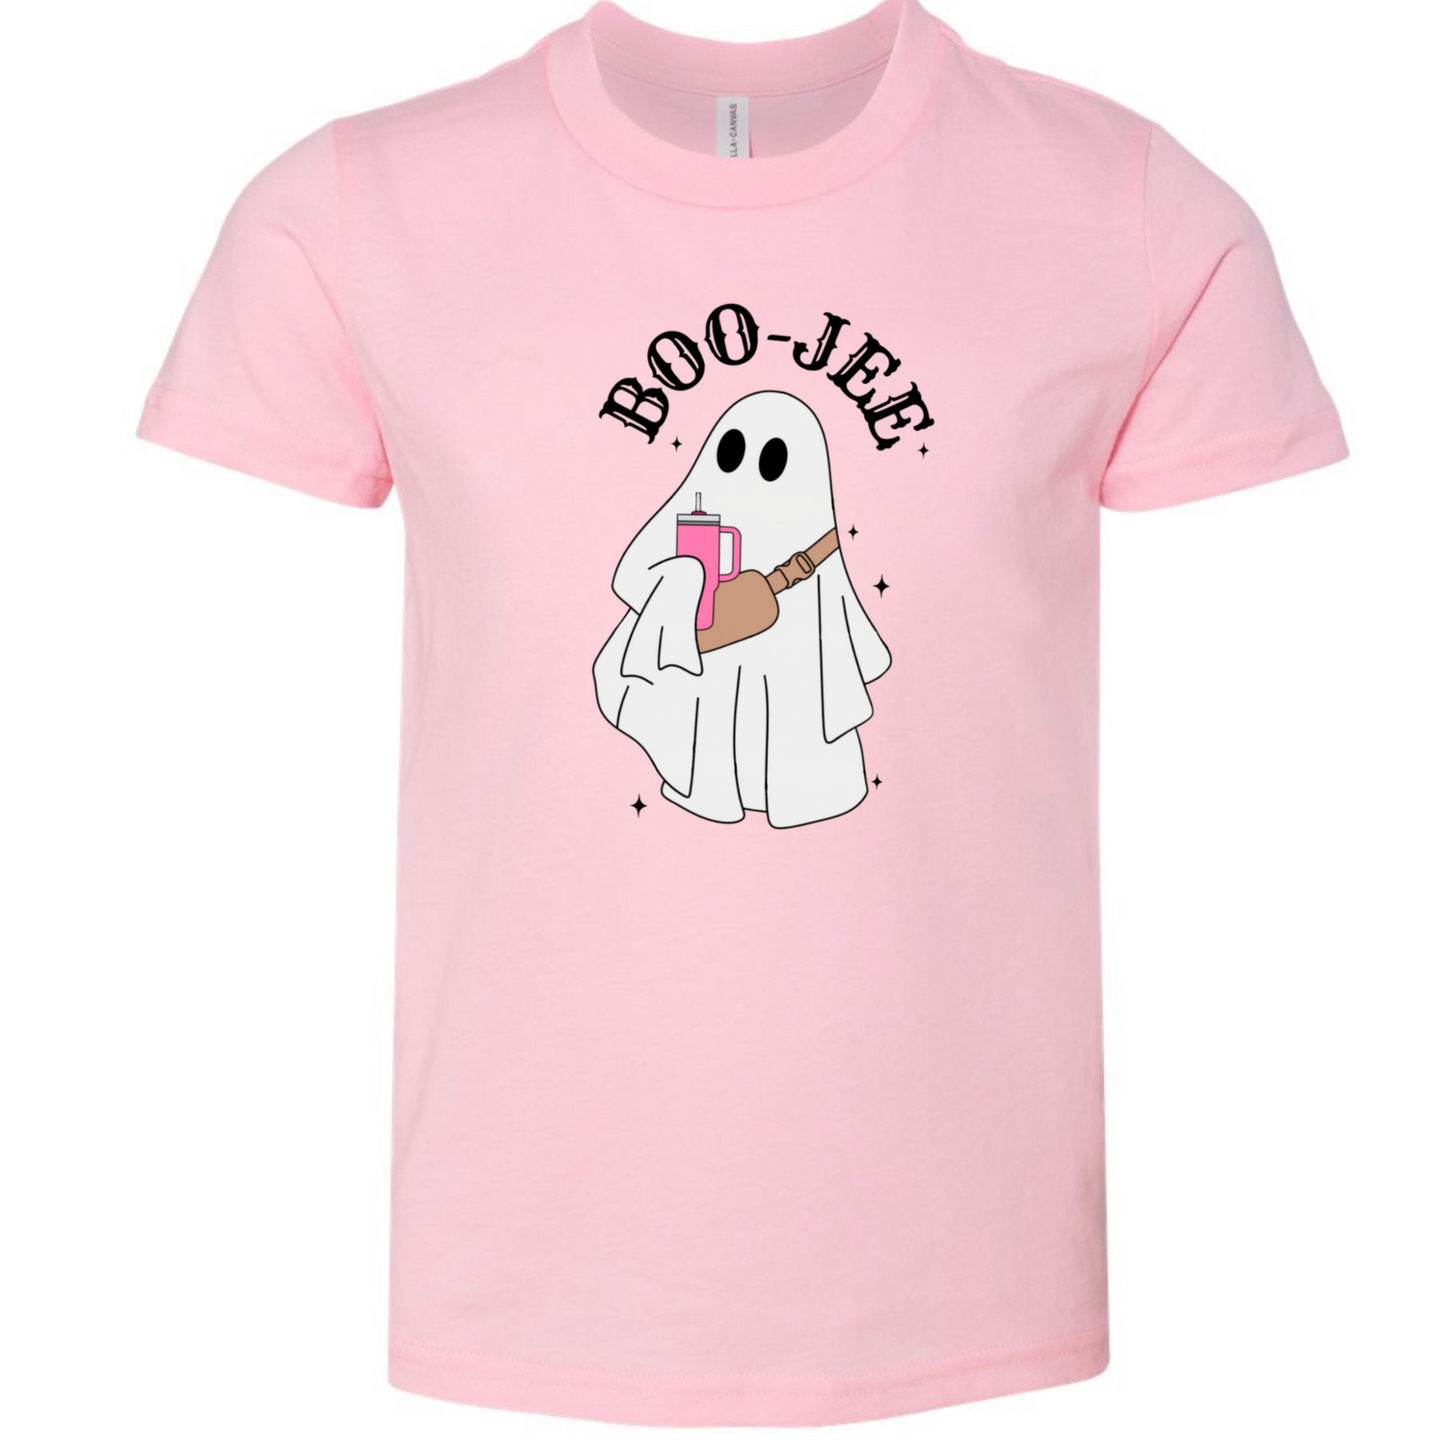 Youth Boo-jee Spooky Season T-shirt